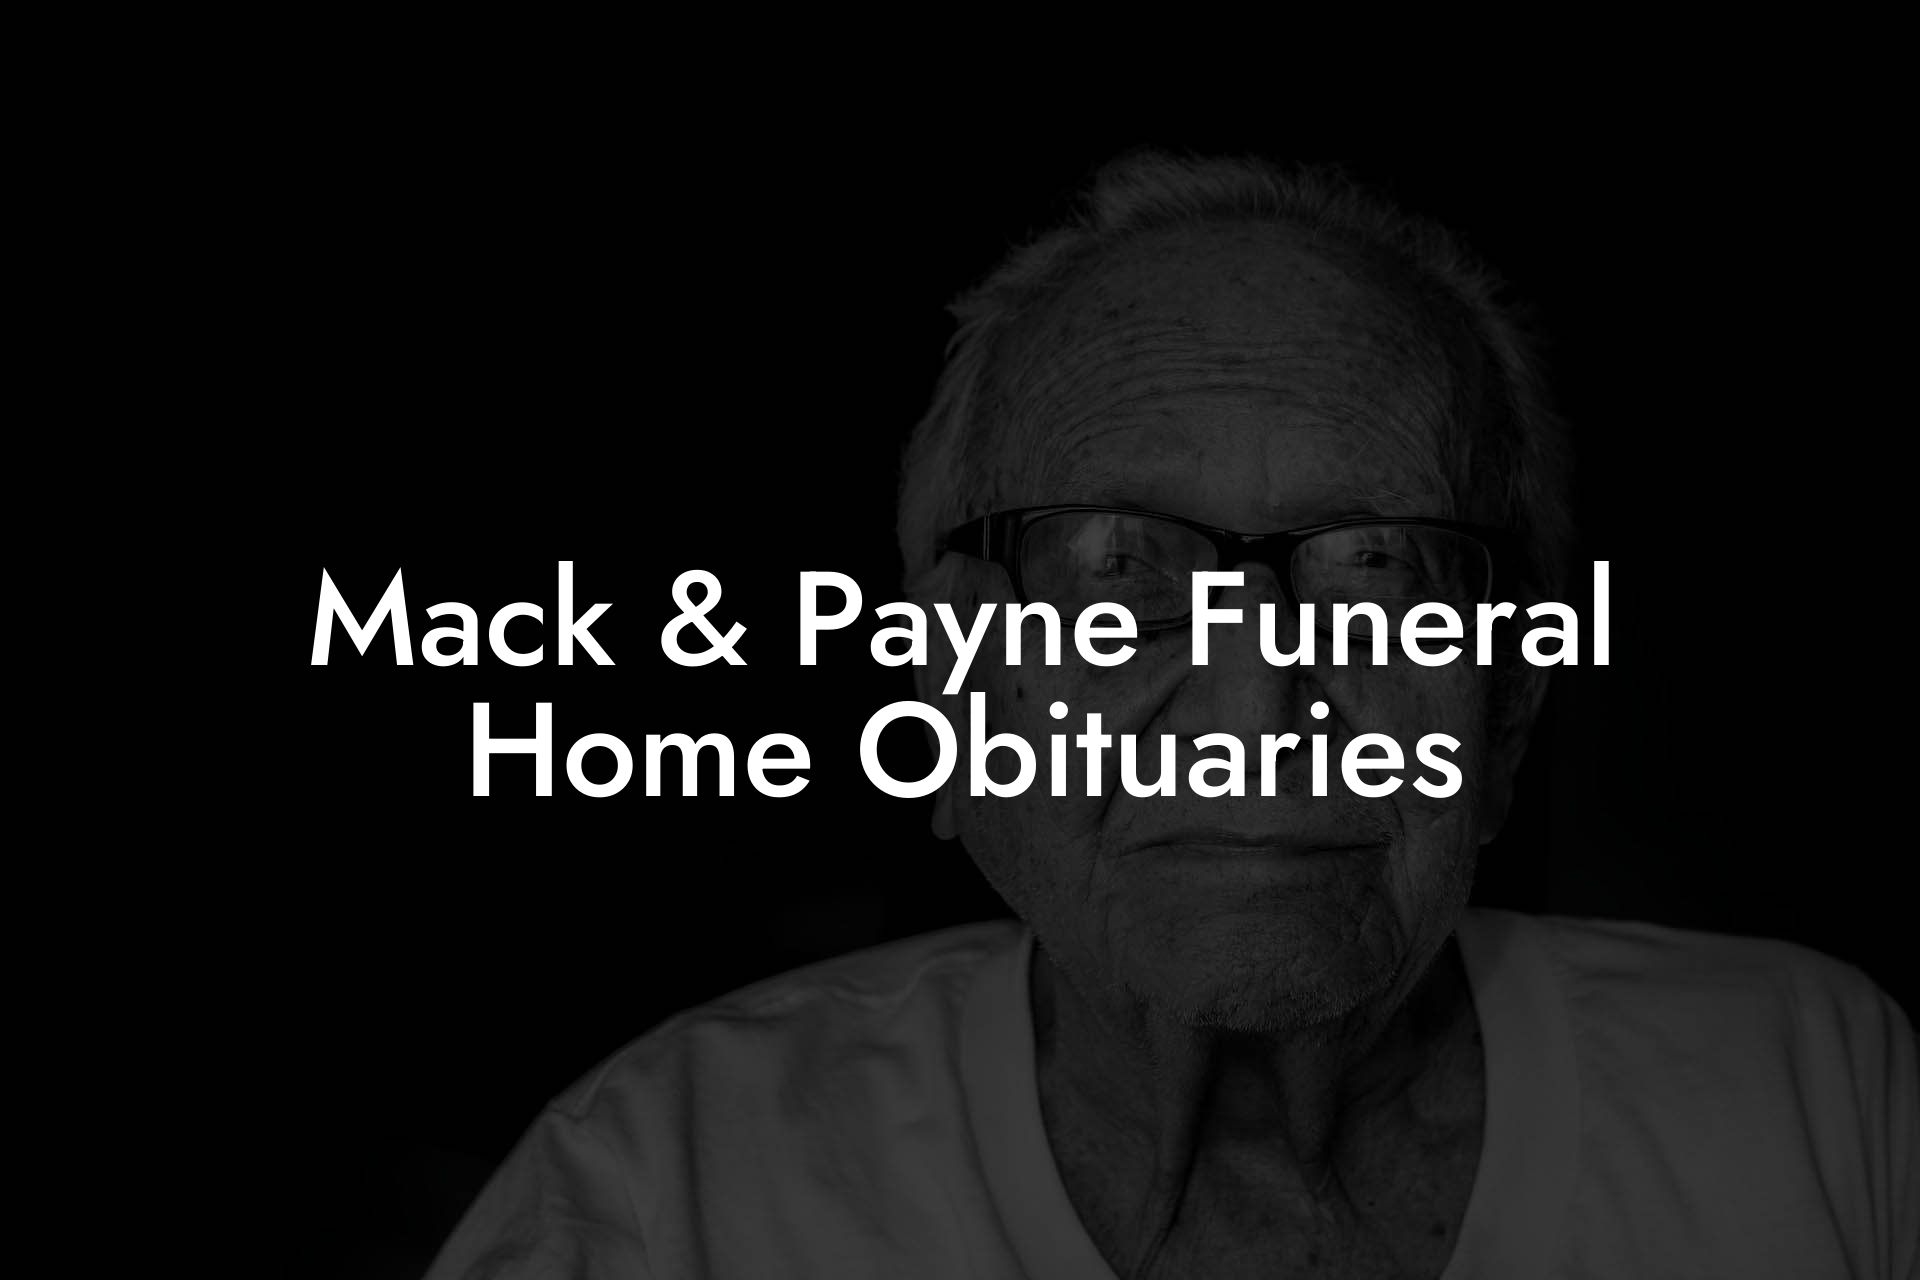 Mack & Payne Funeral Home Obituaries